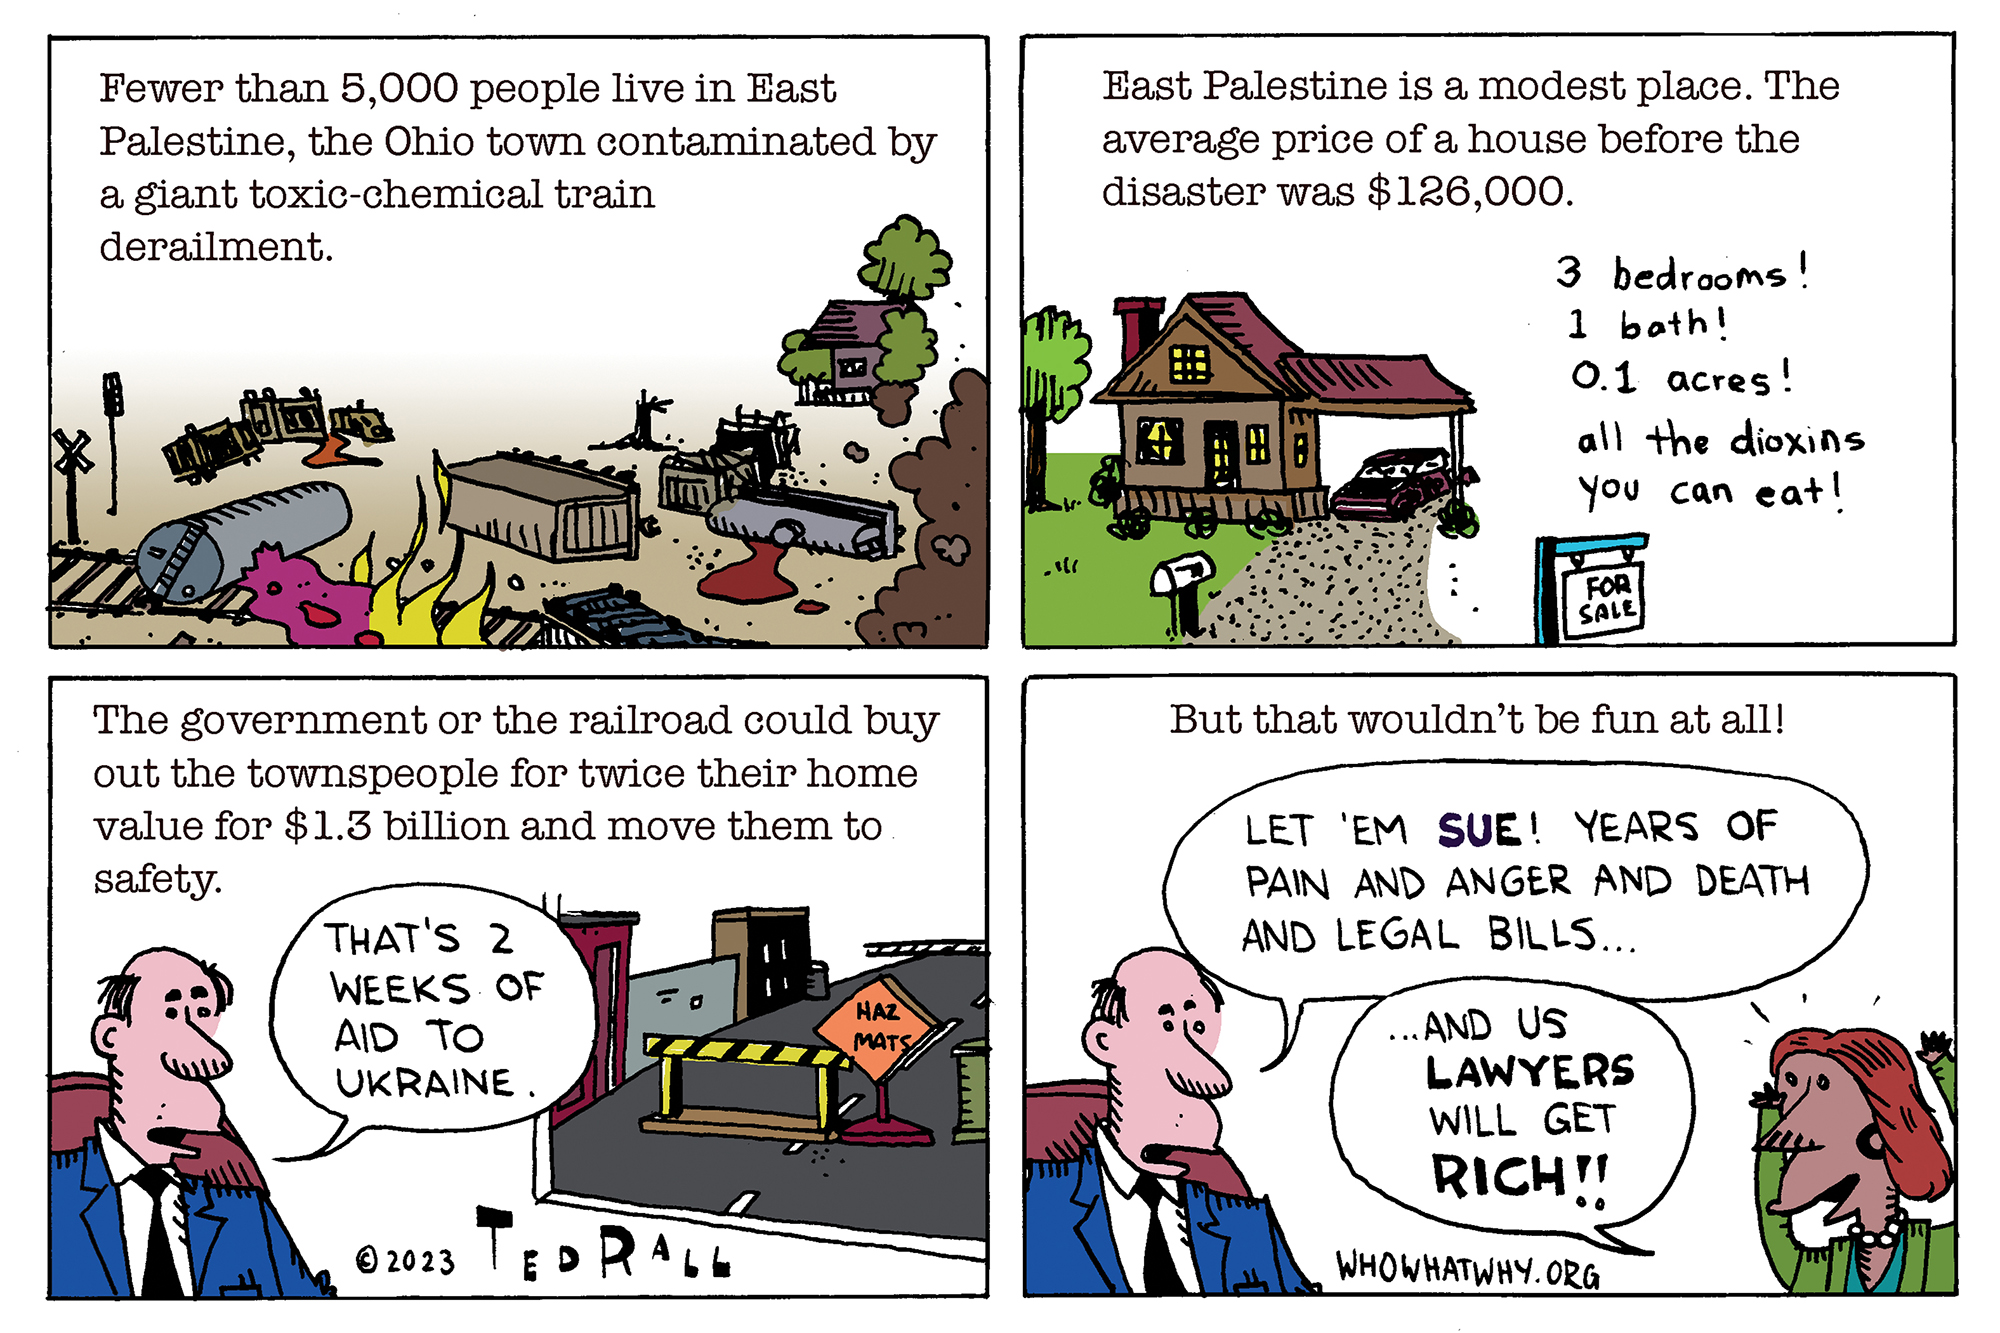 East Palestine, toxic contamination